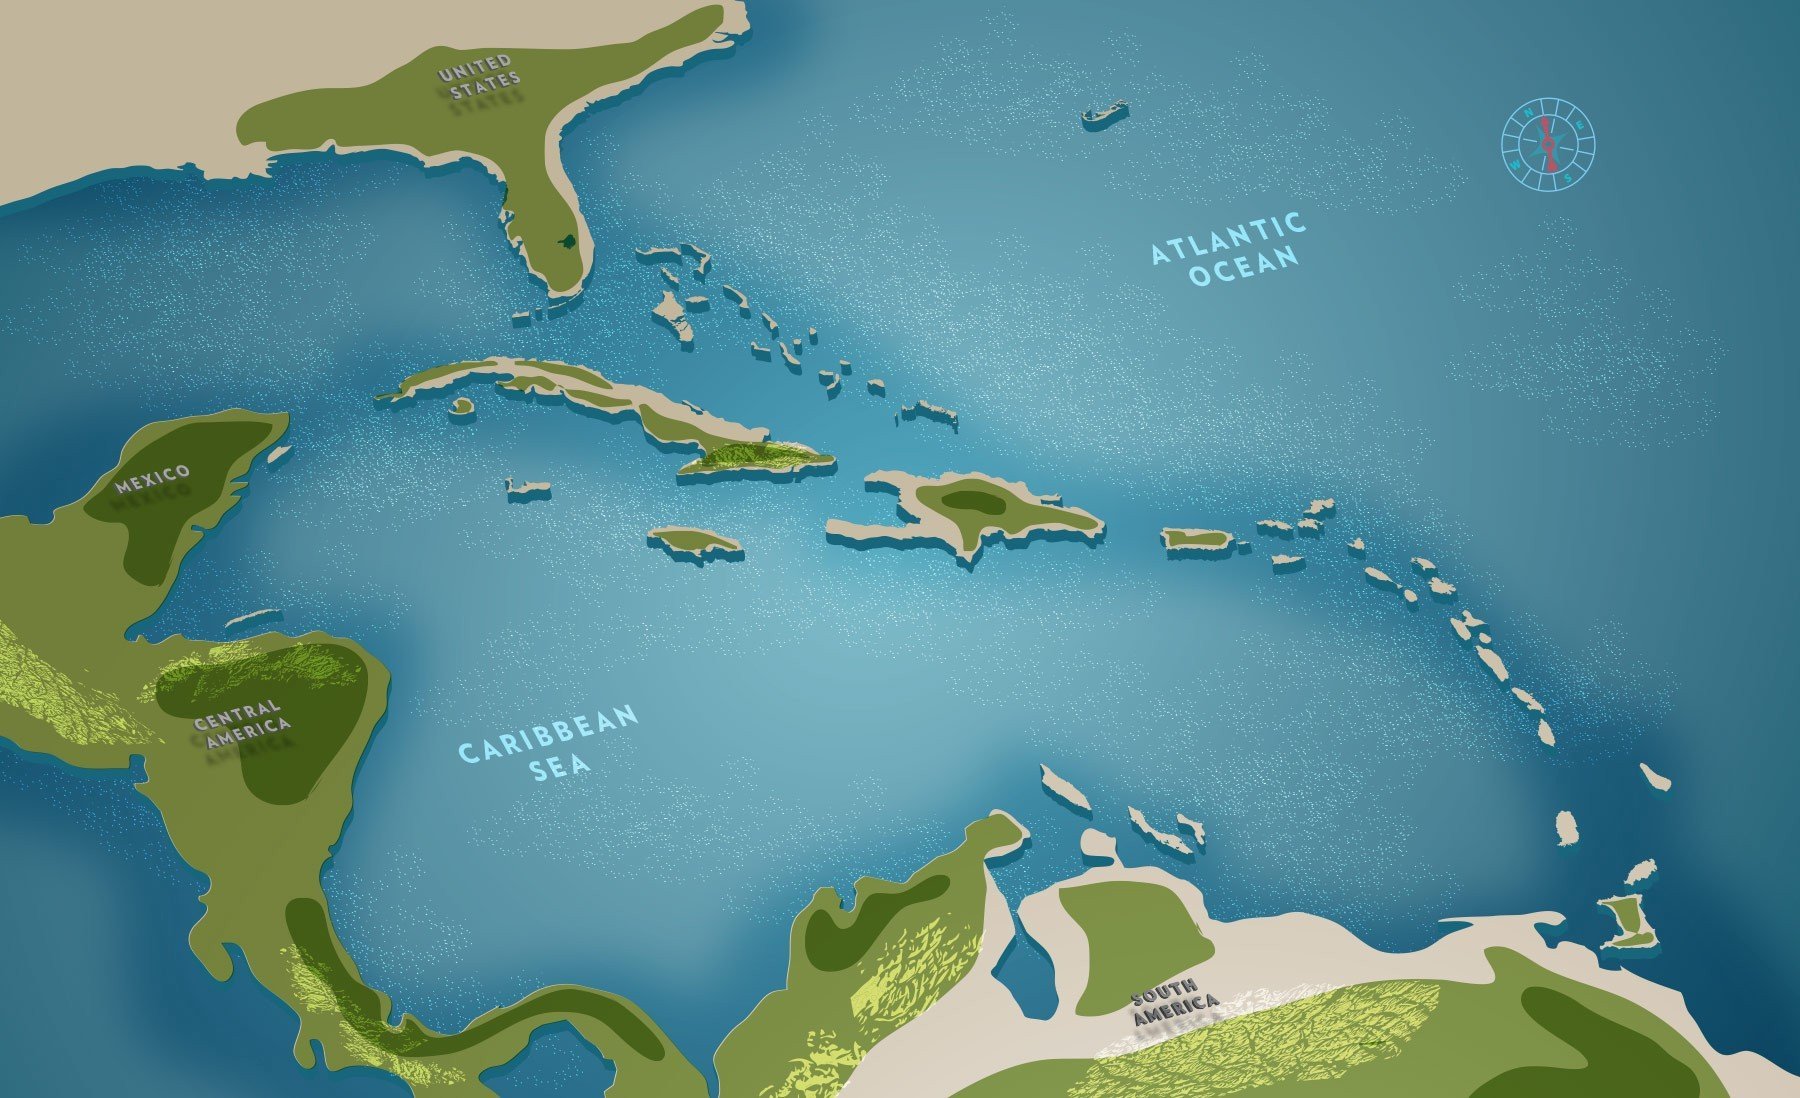 3 архипелага. Карта Карибского моря с островами. Карибы Карибские острова карта мира. Острова Карибского моря на карте мира. Границы Карибского моря на карте.